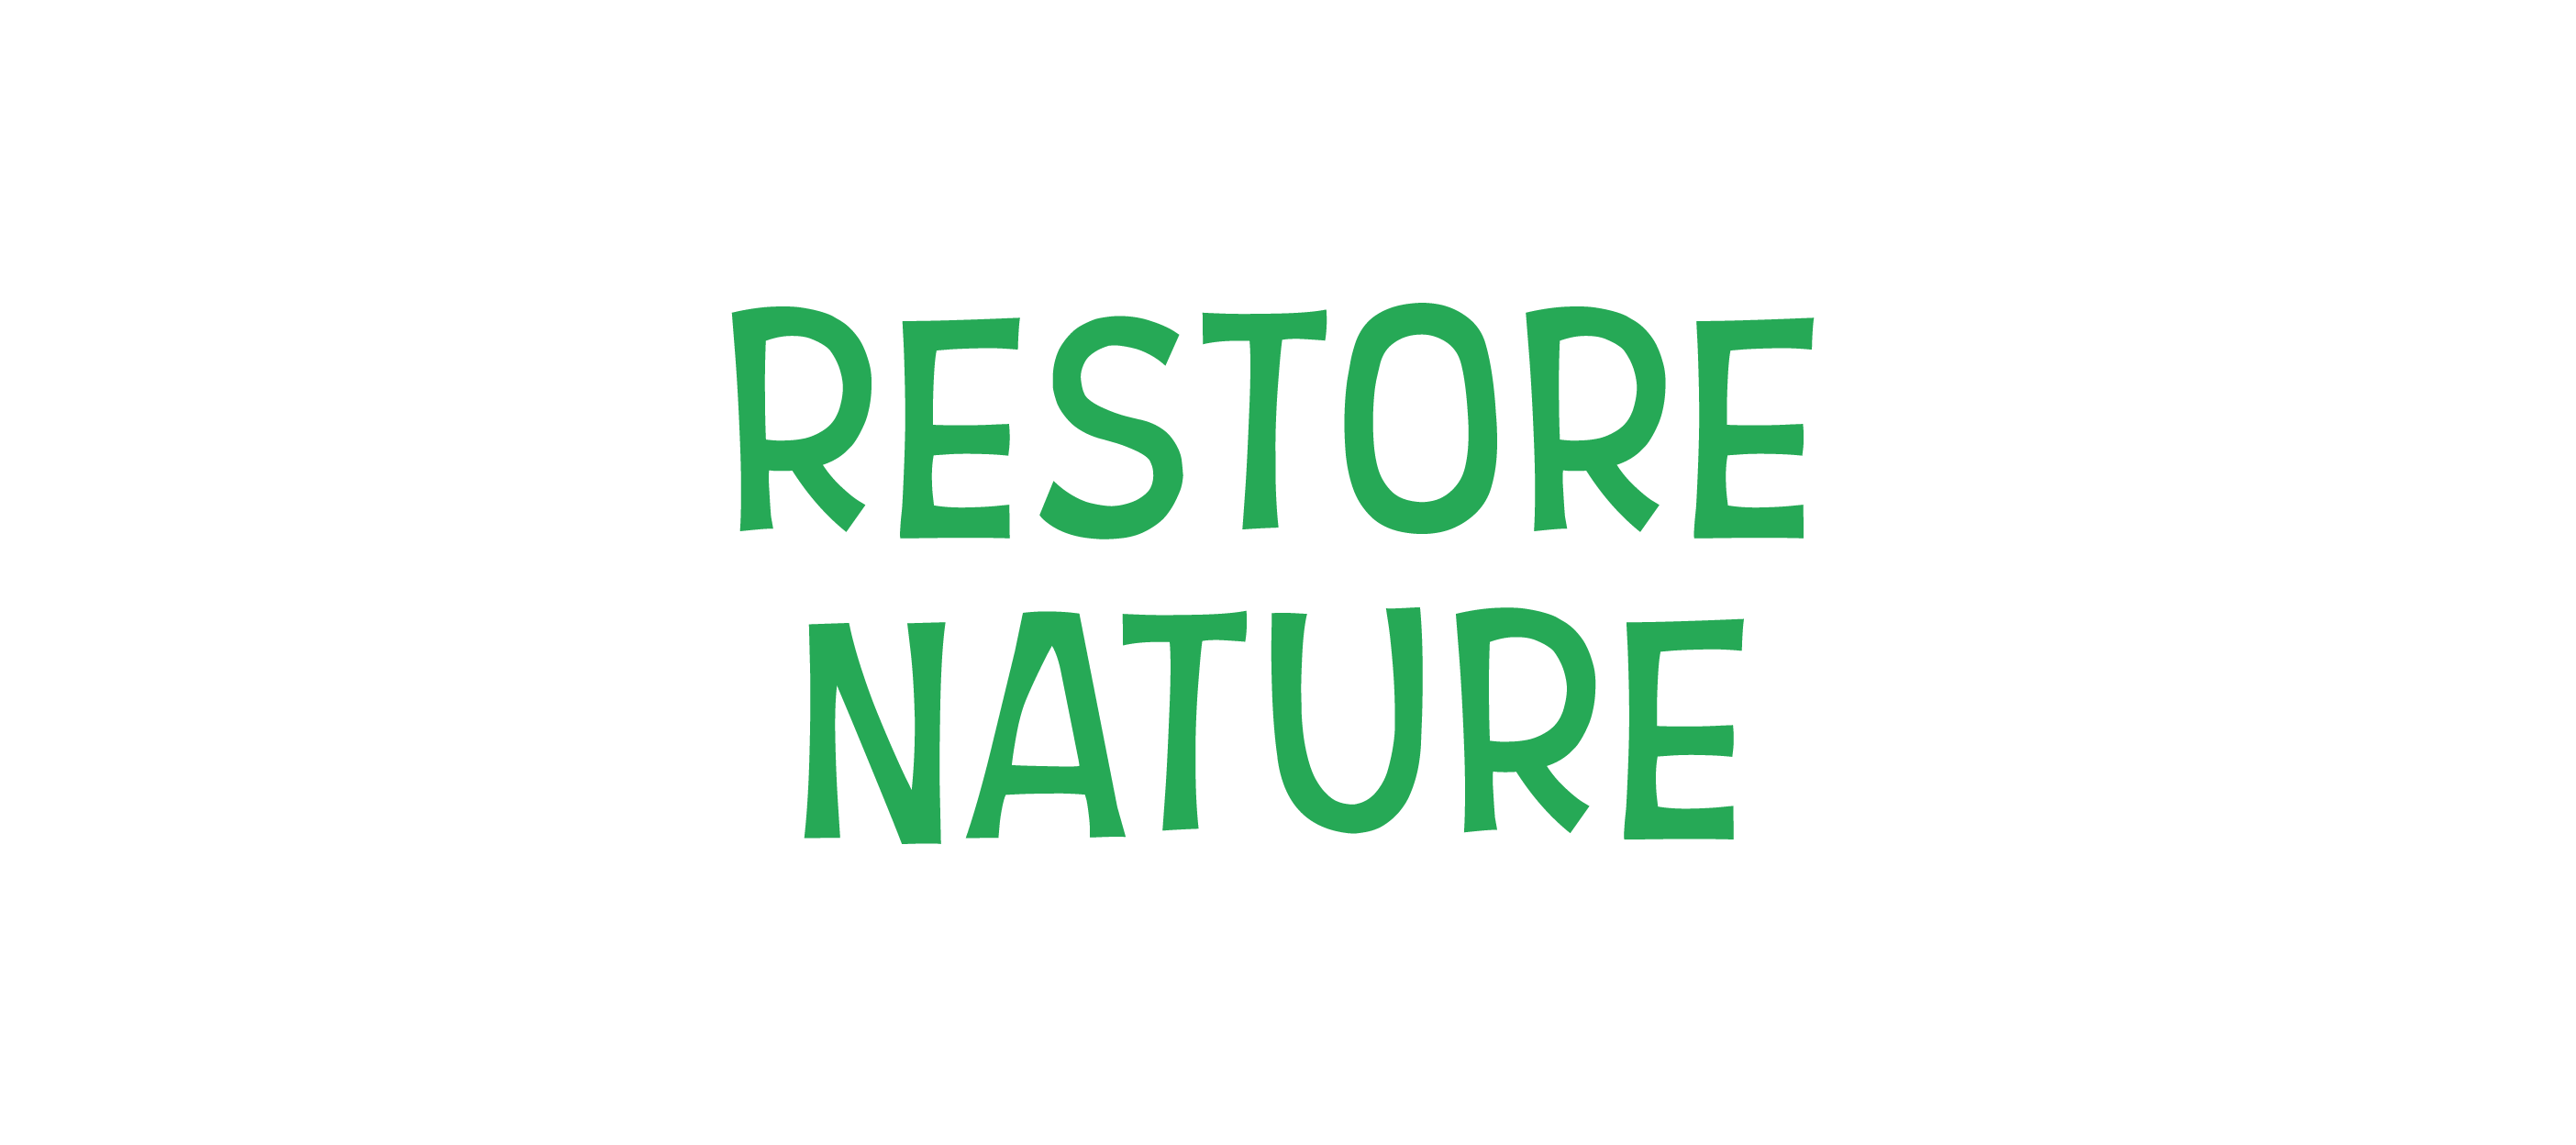 restorenature_banner-01